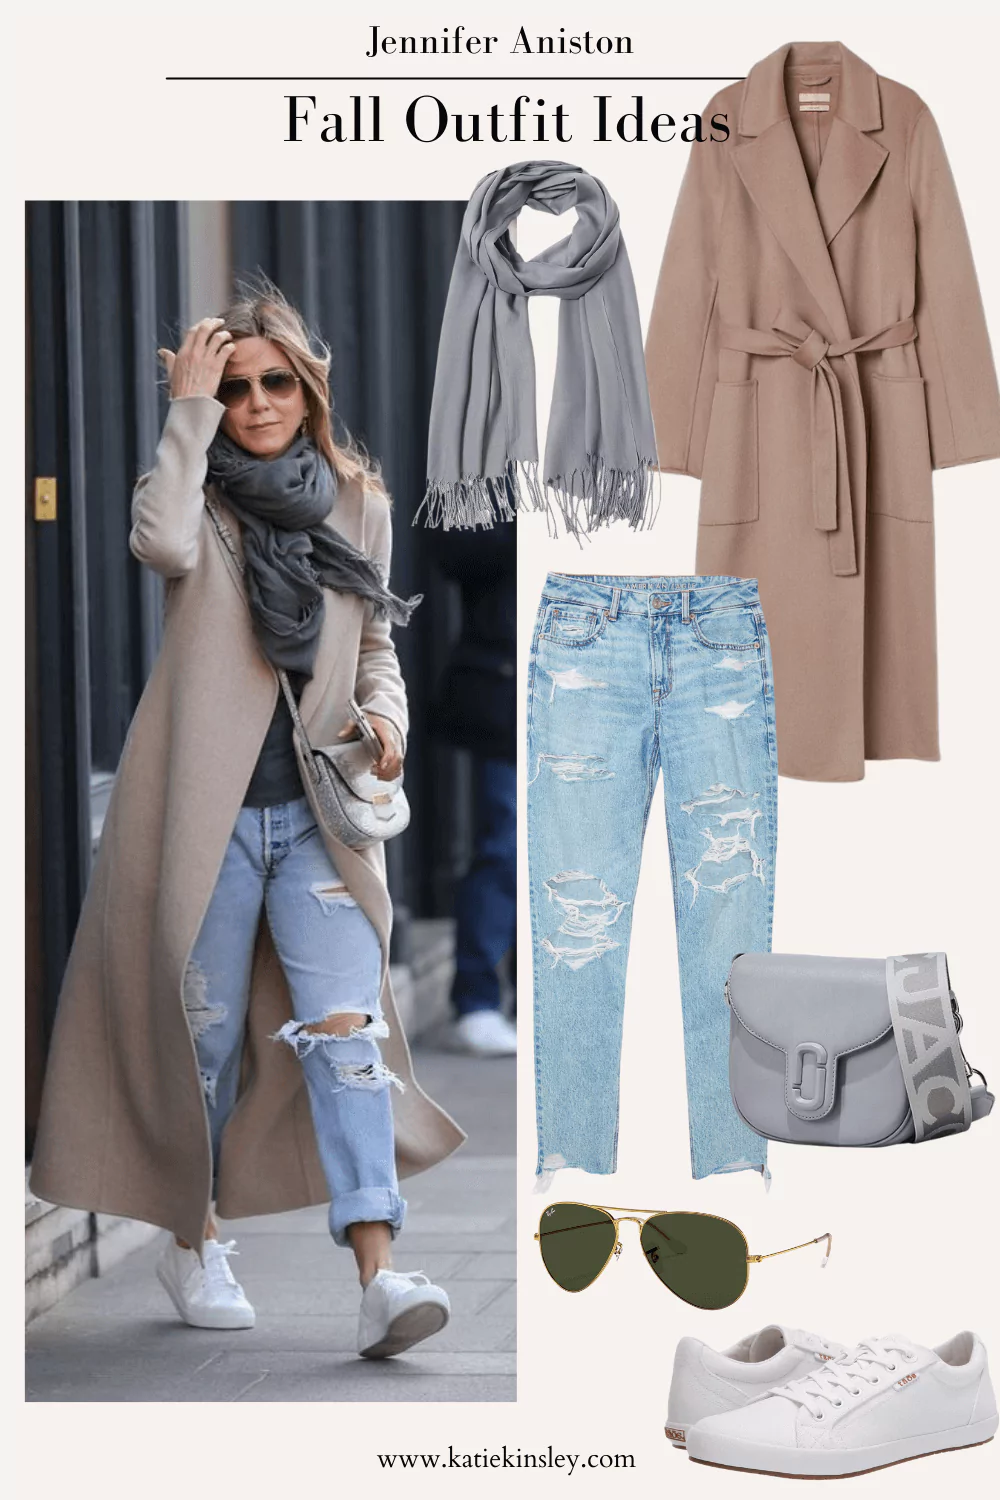 Fall Outfit Ideas Jennifer Aniston